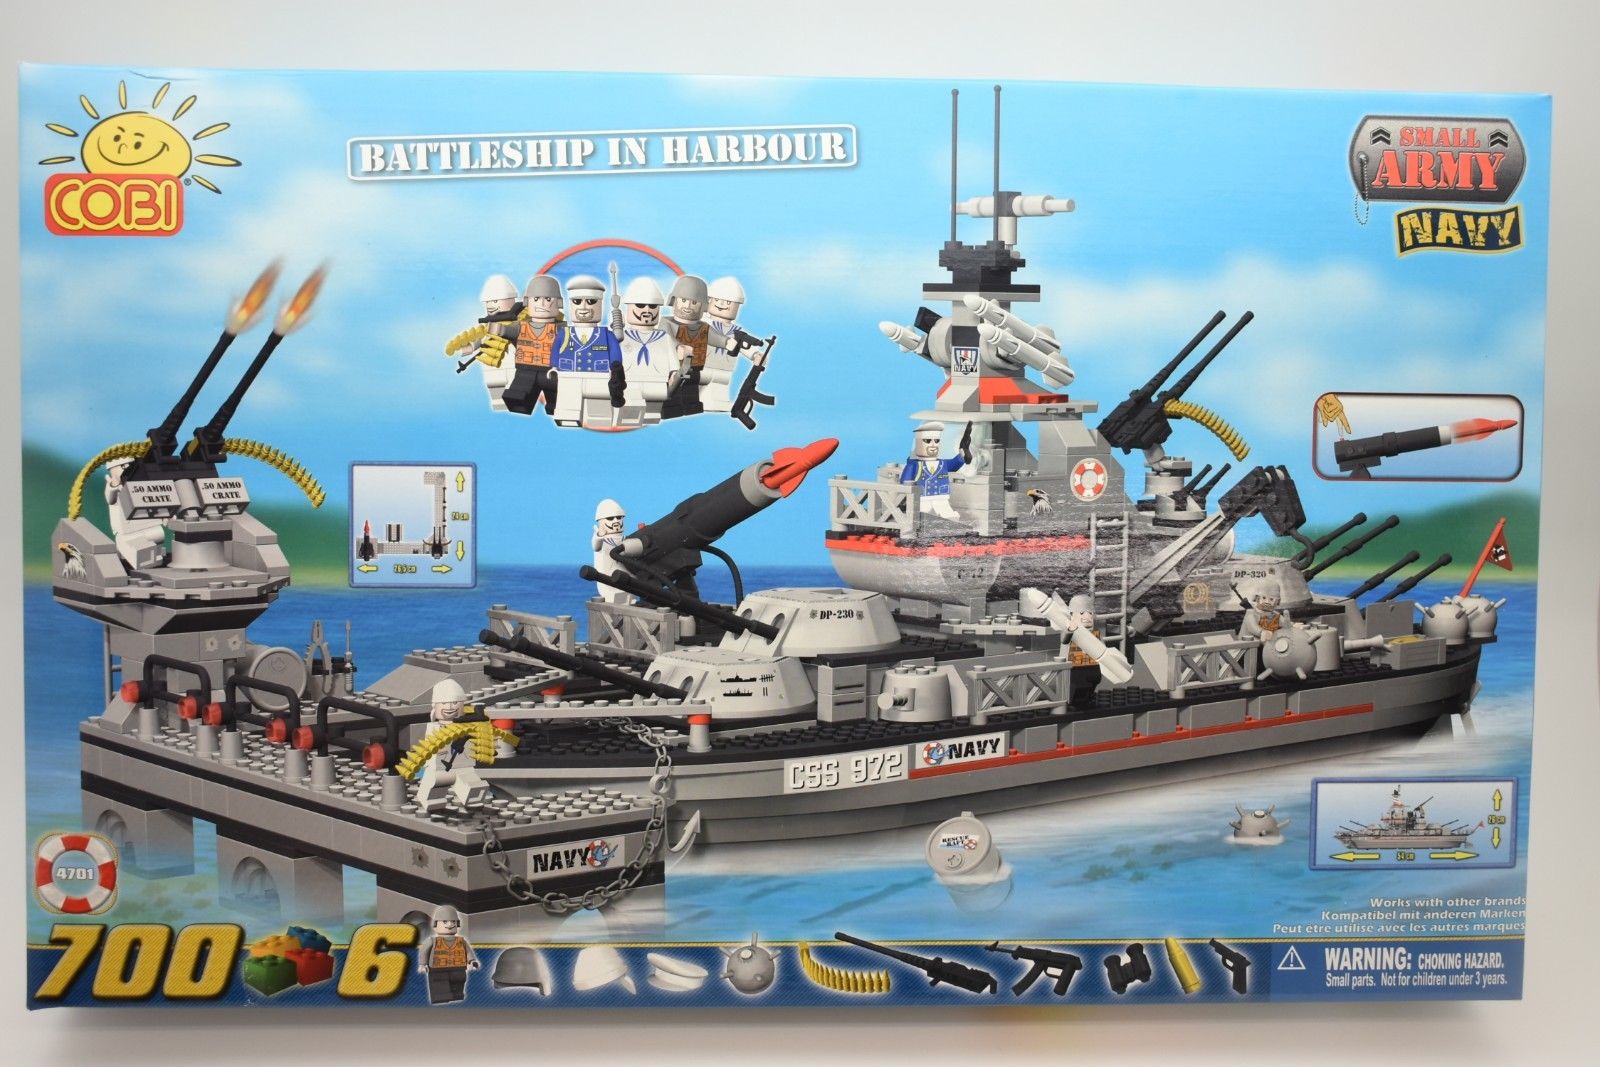 4701 - Battleship in Harbour